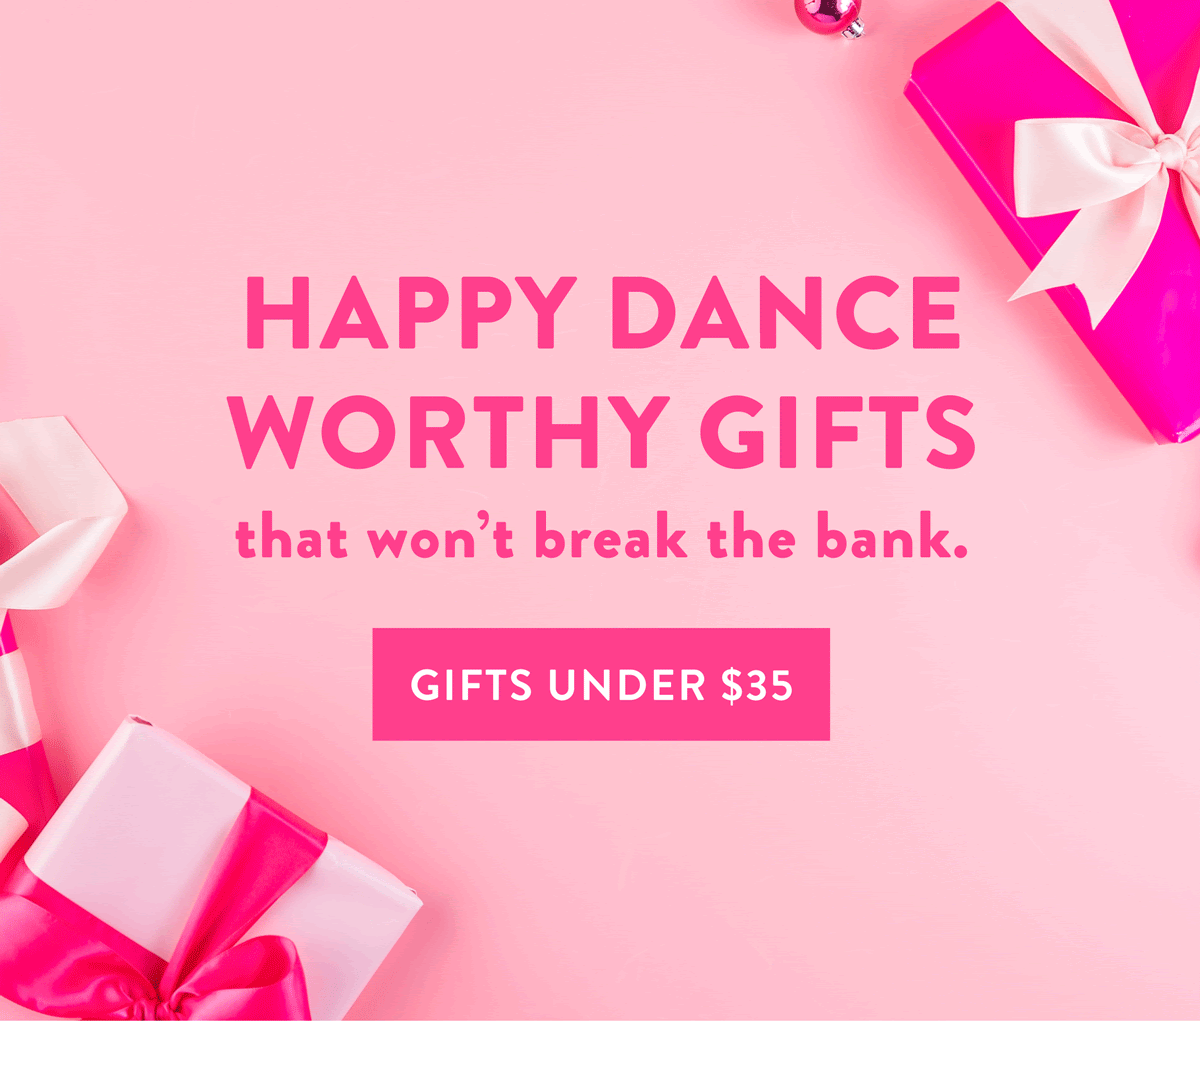 Happy dance worthy gifts that won't break the bank.